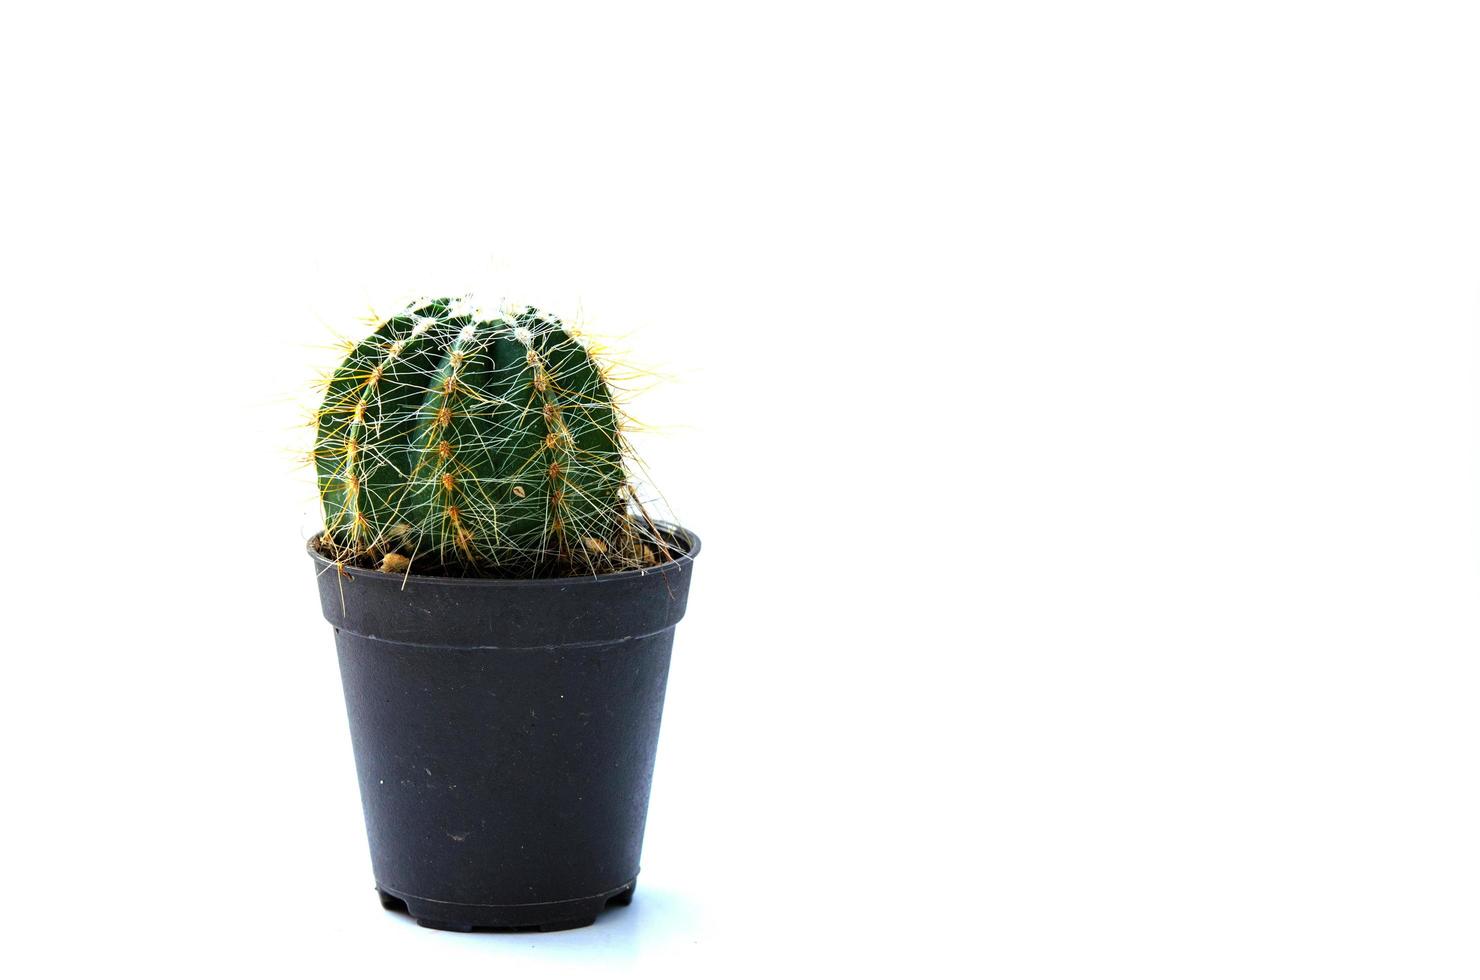 ingemaakte cactus op wit foto